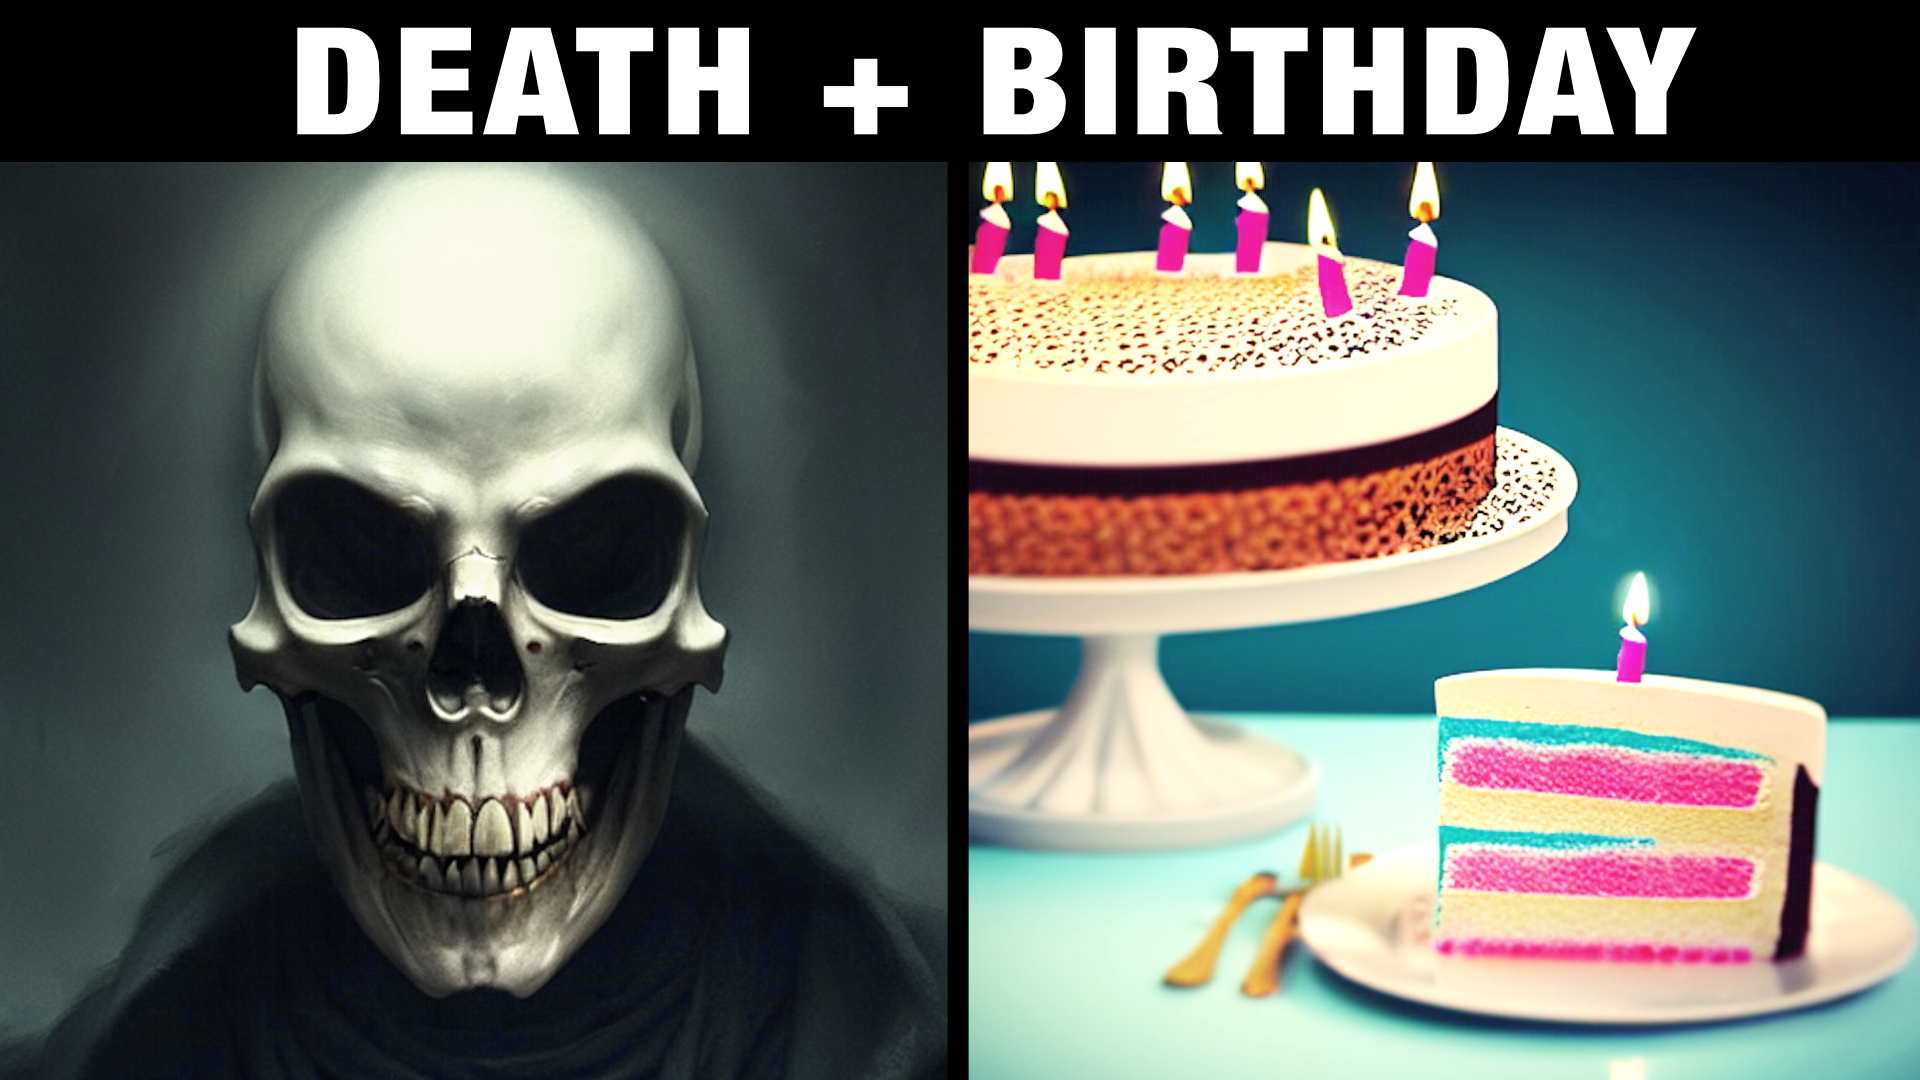 Happy Birthday - But it's Death